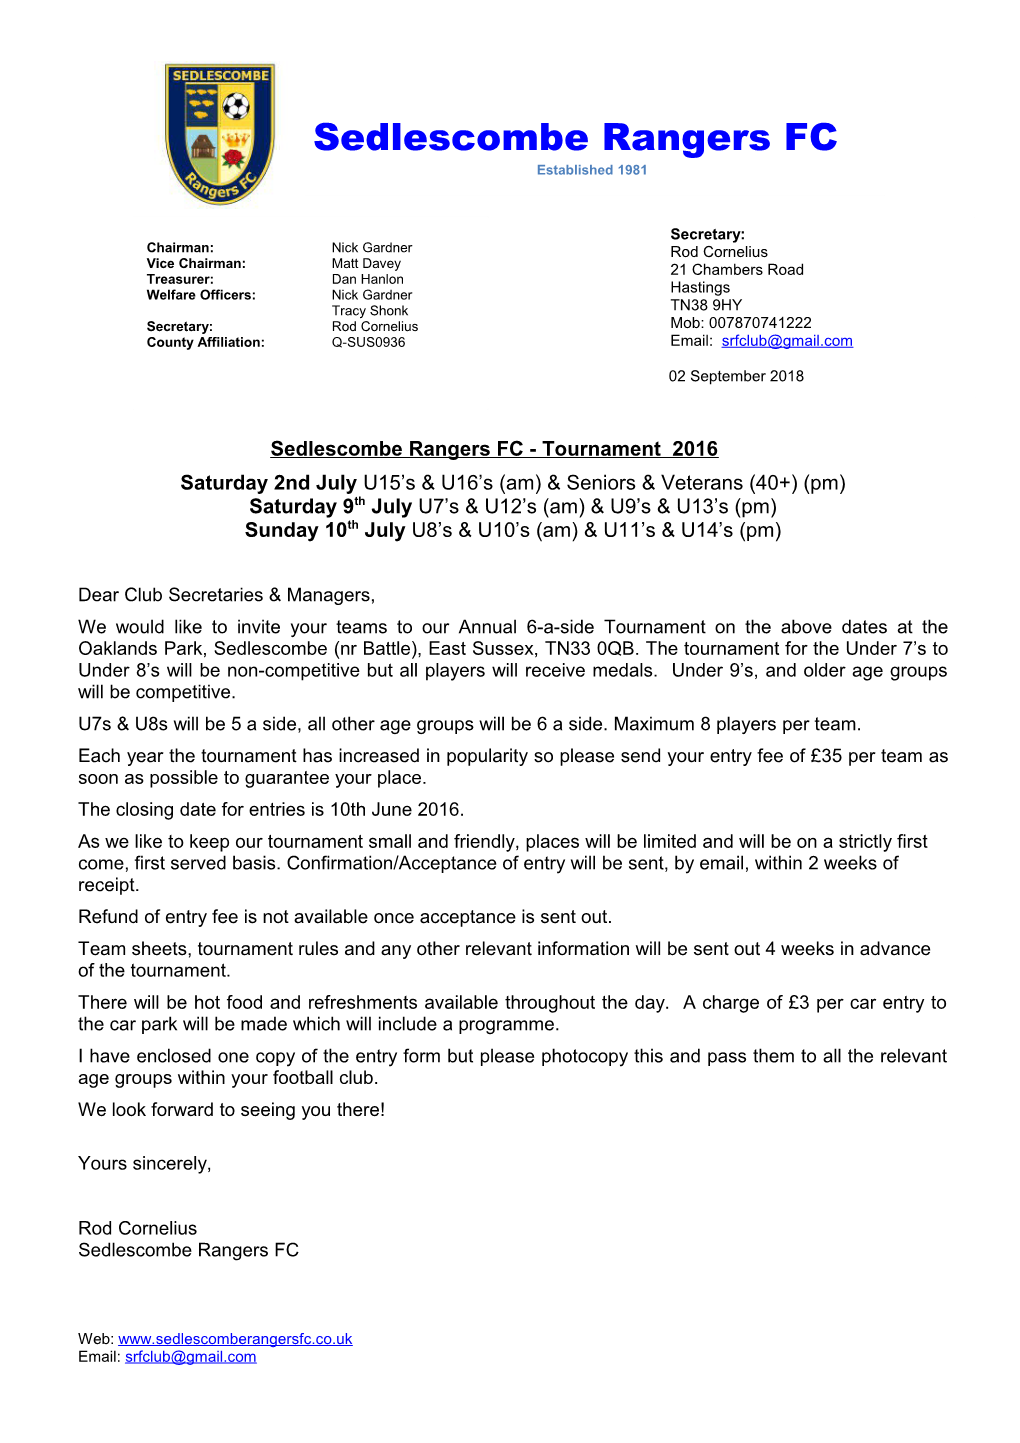 Sedlescombe Rangers FC - Tournament 2016